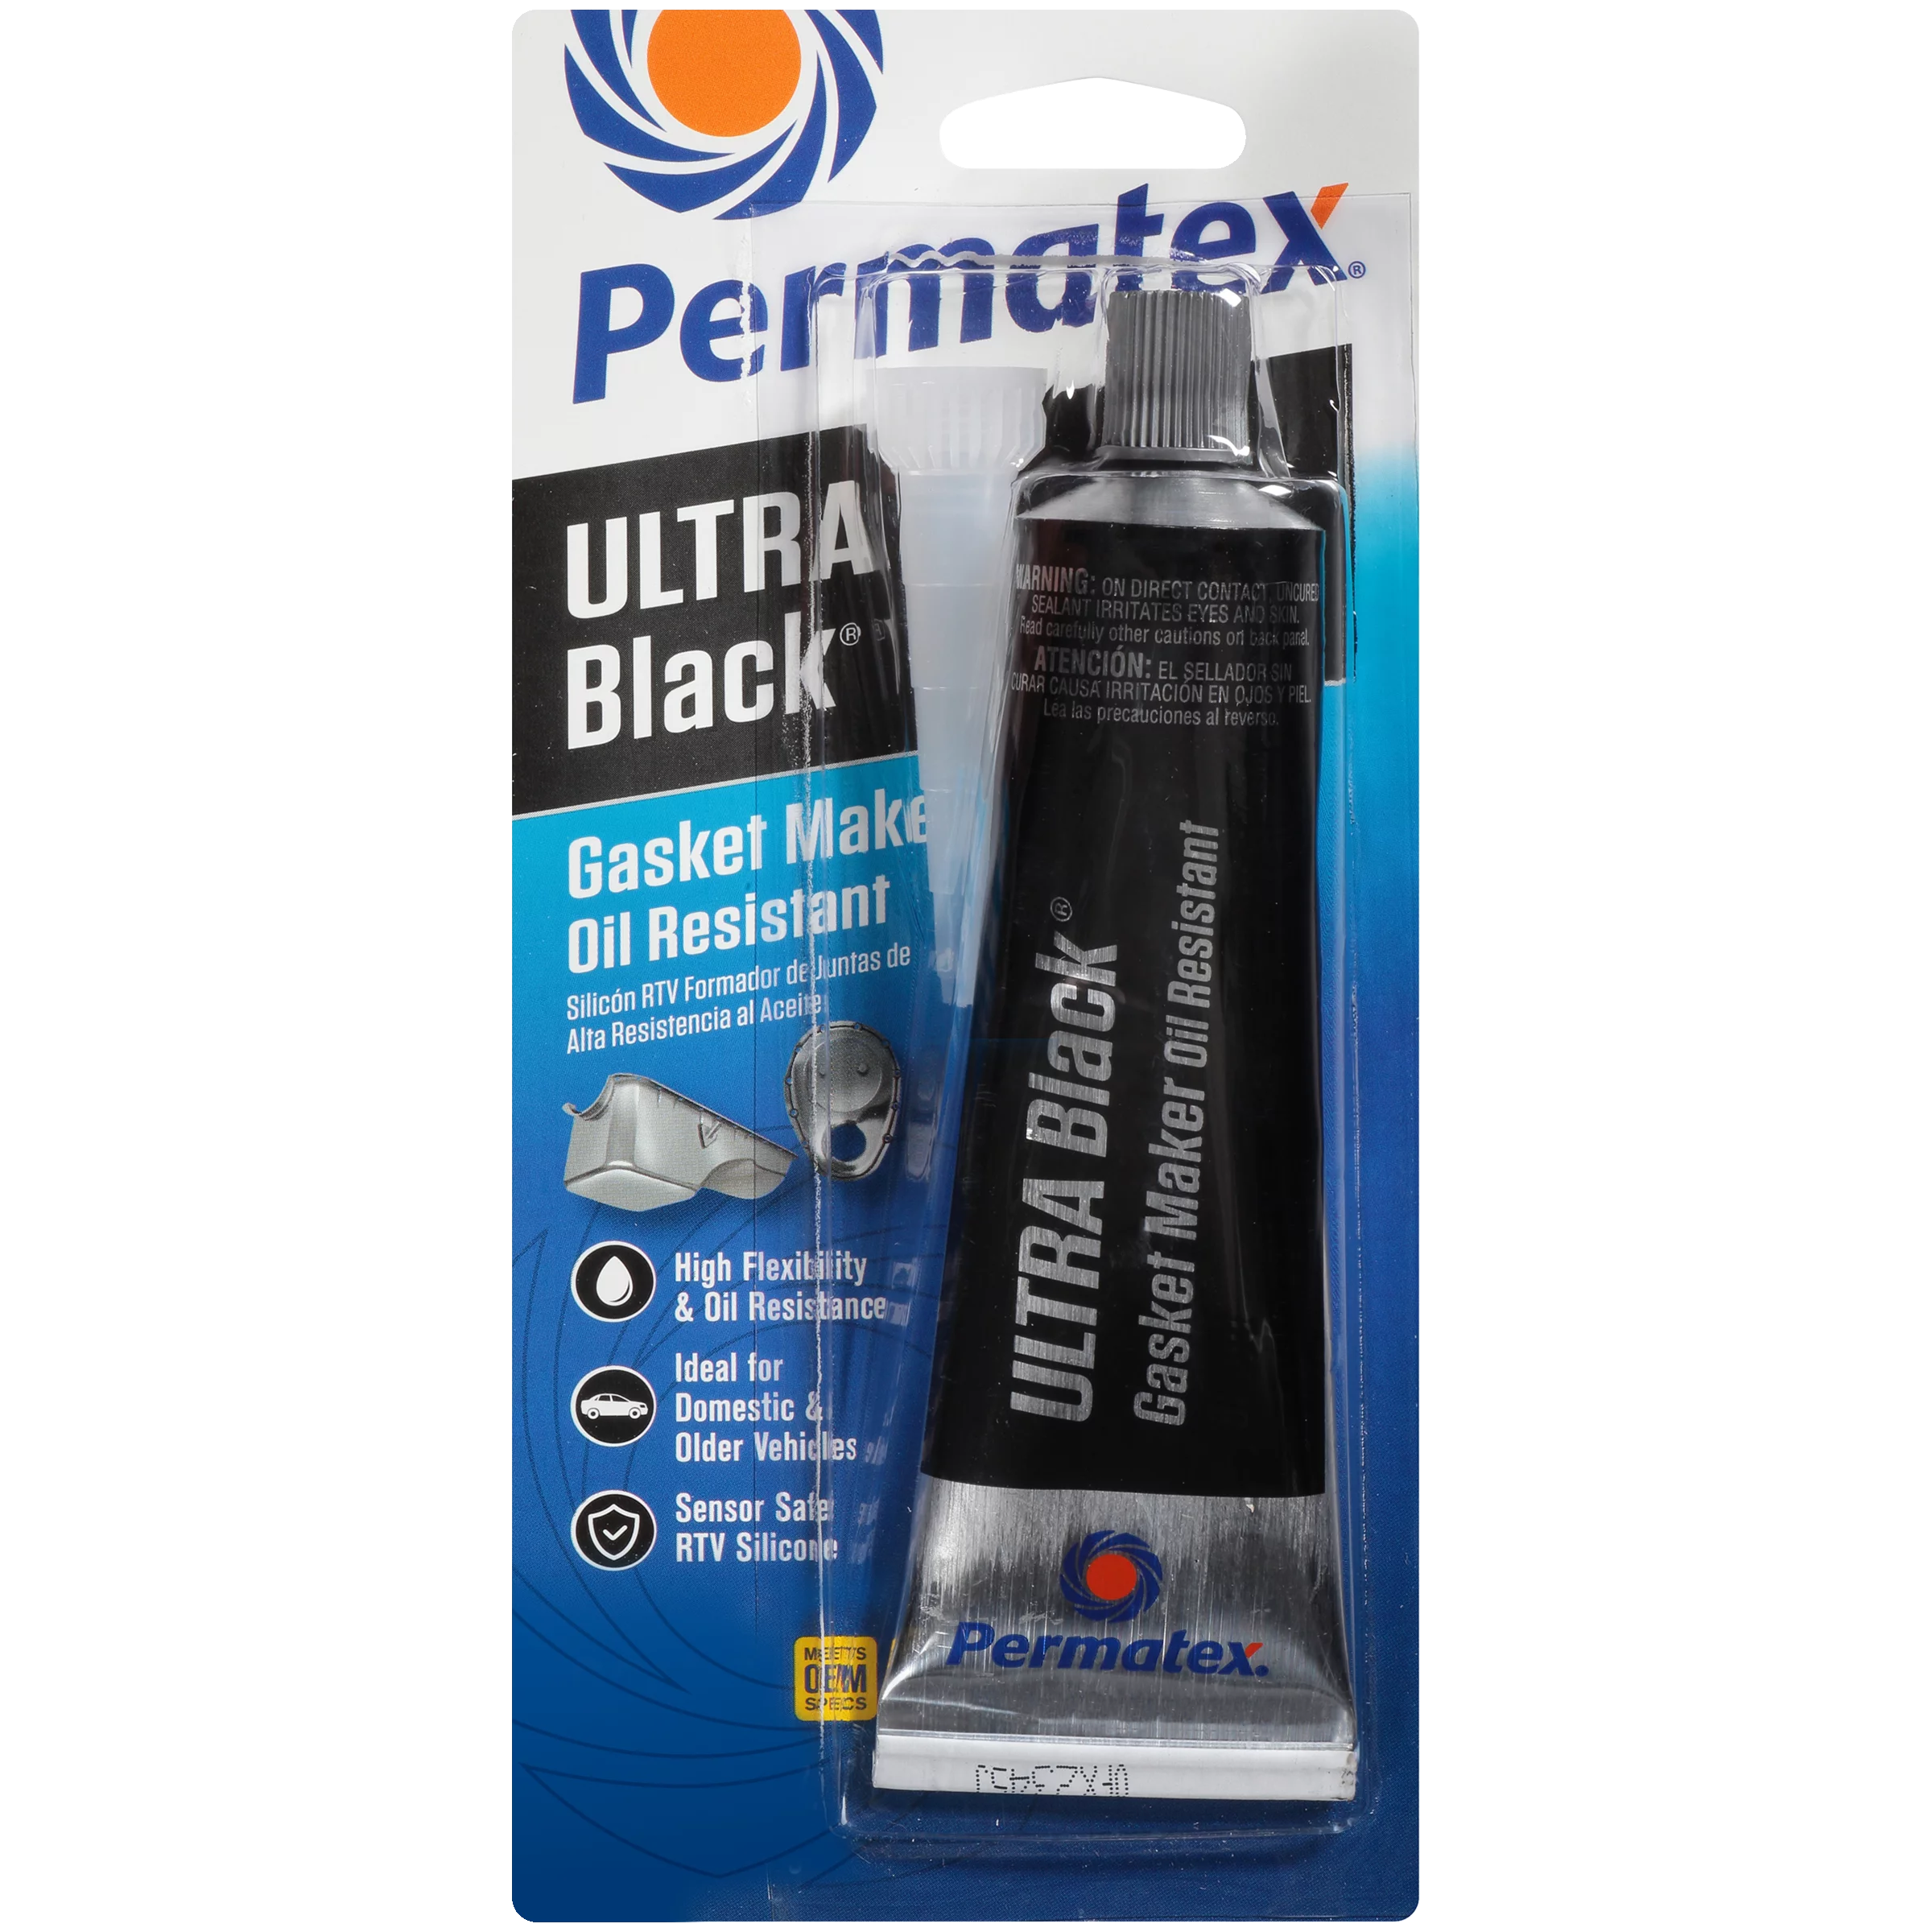 Permatex Ultra Black Gasket Marker